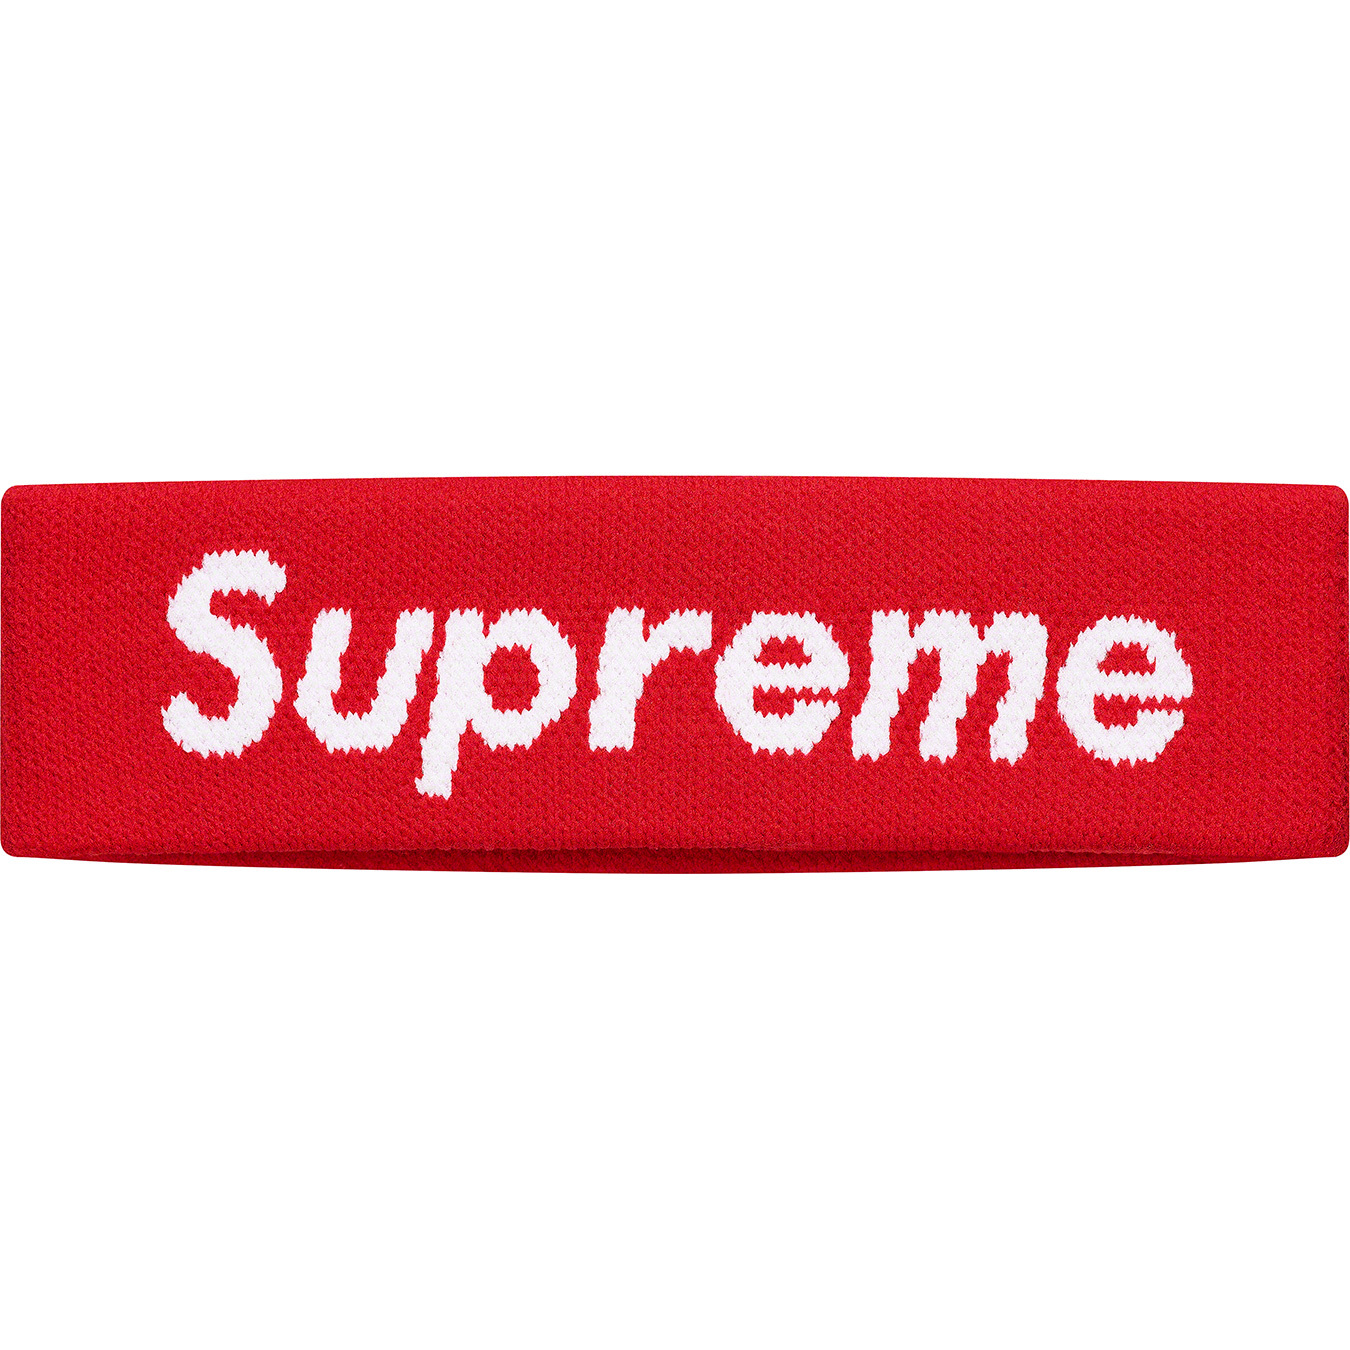 Supreme®/Nike®/NBA Headband - Supreme Community